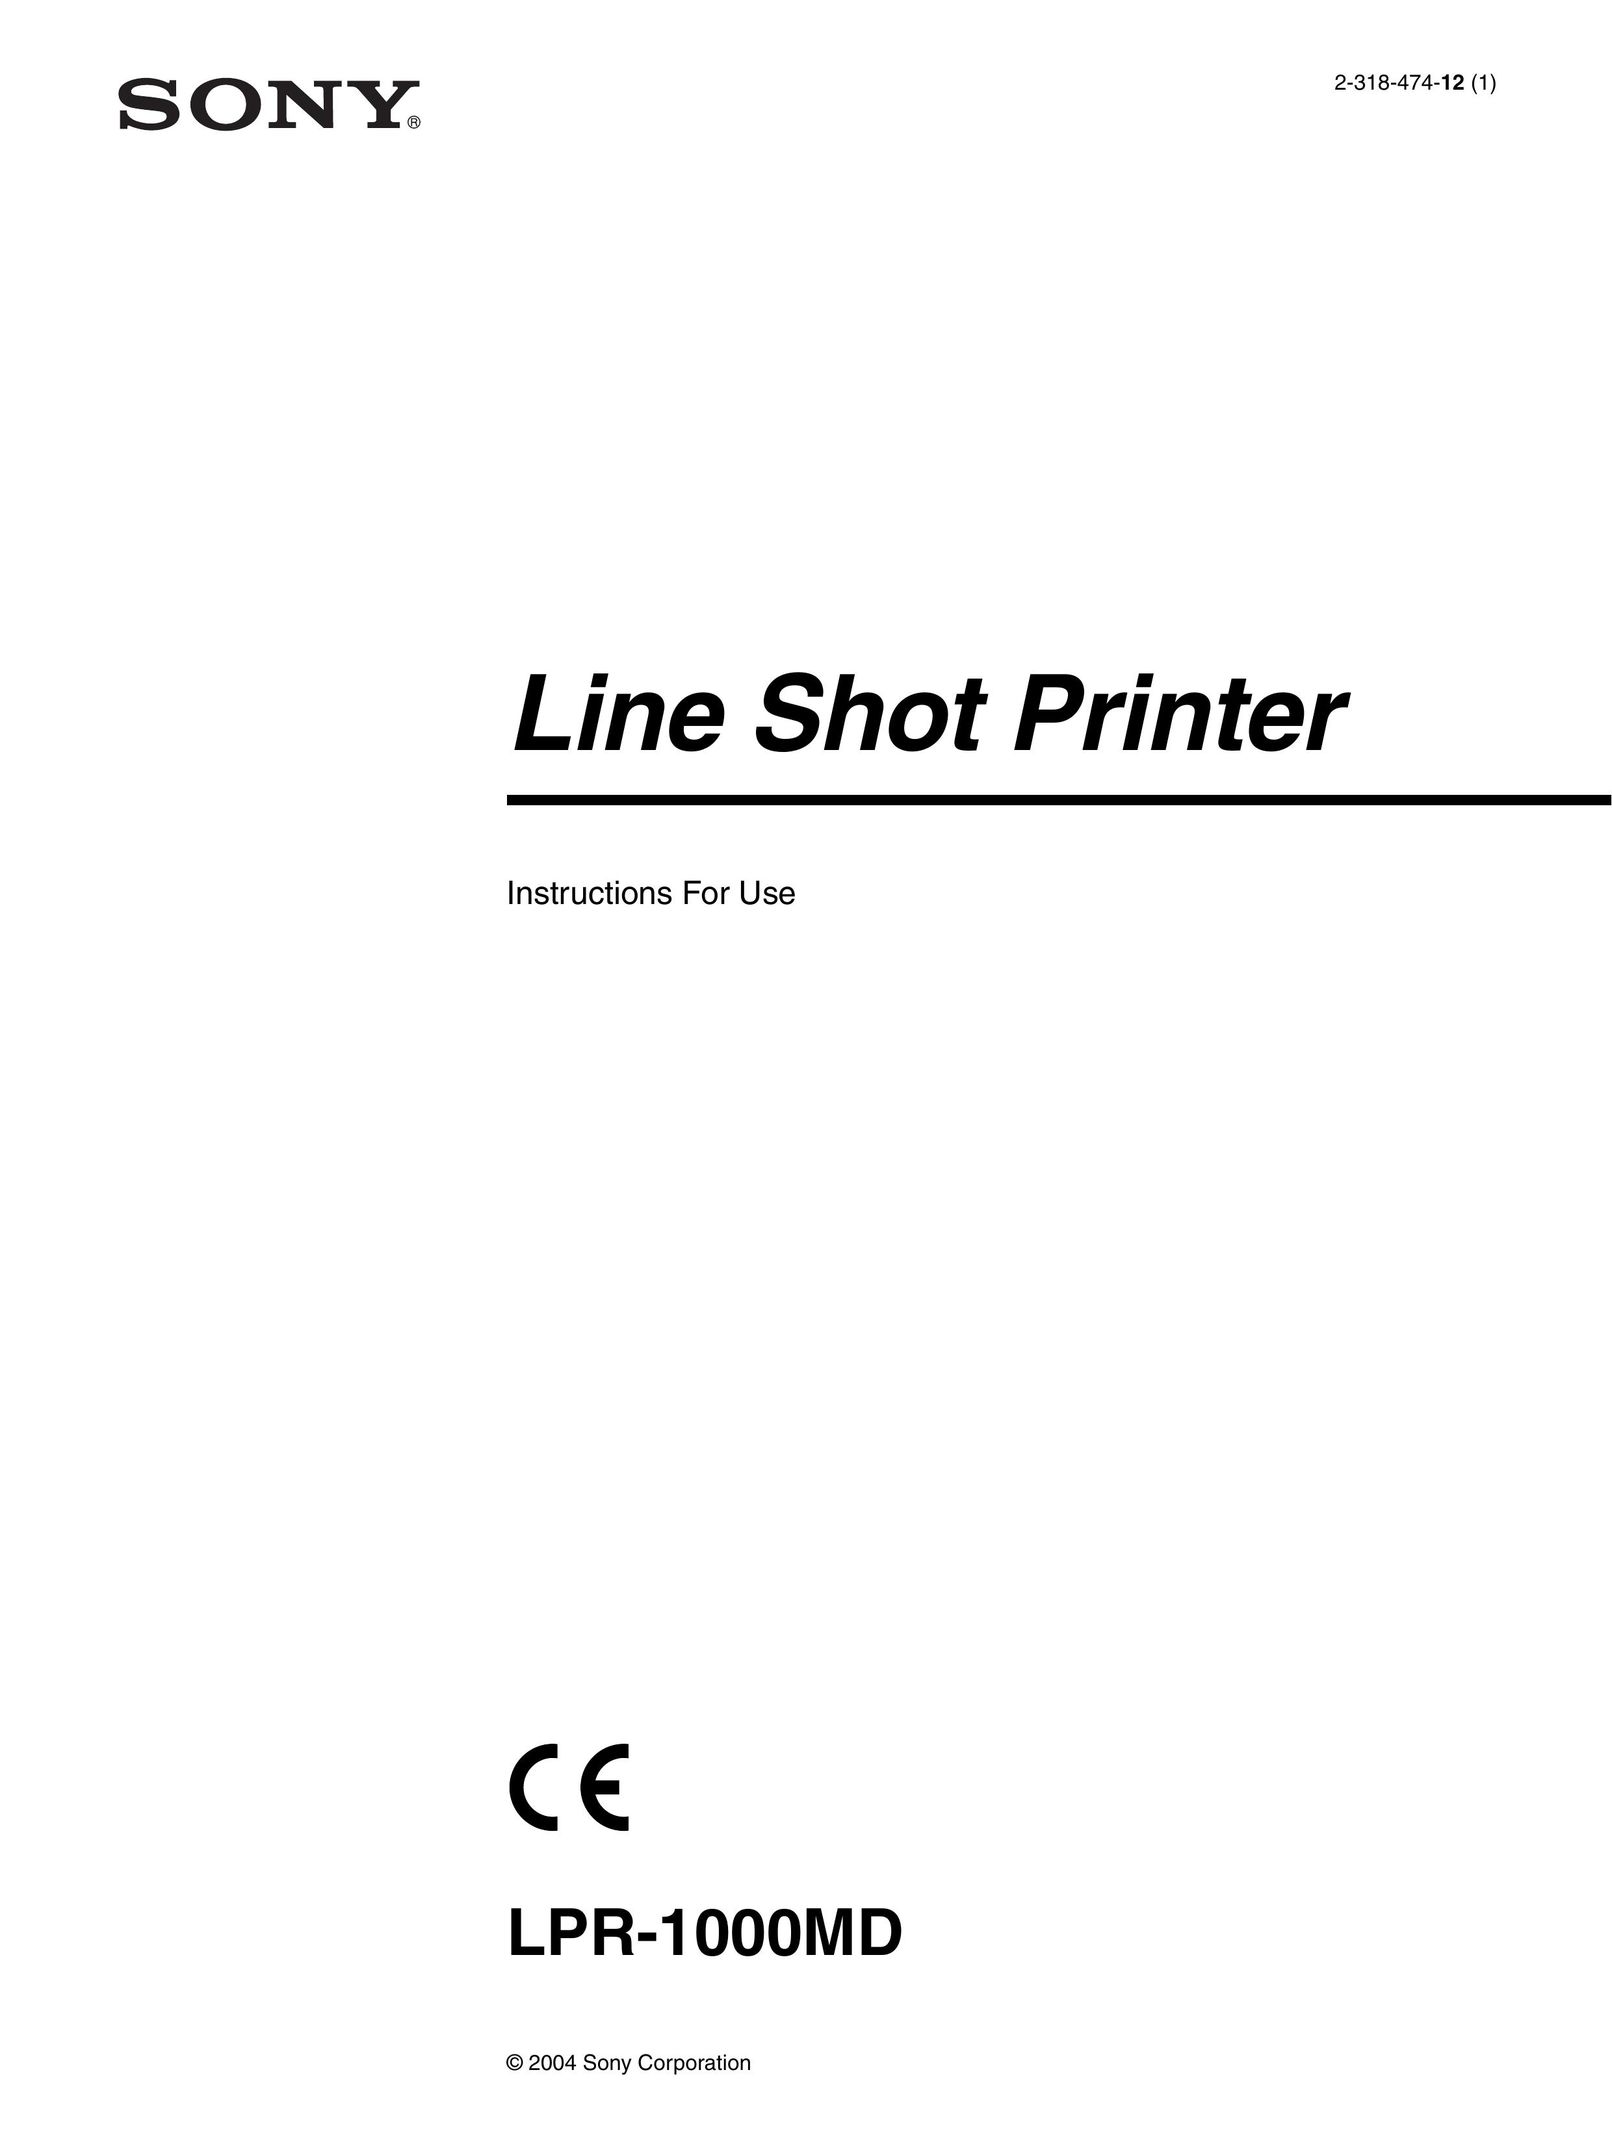 Sony LPR-1000MD Printer User Manual